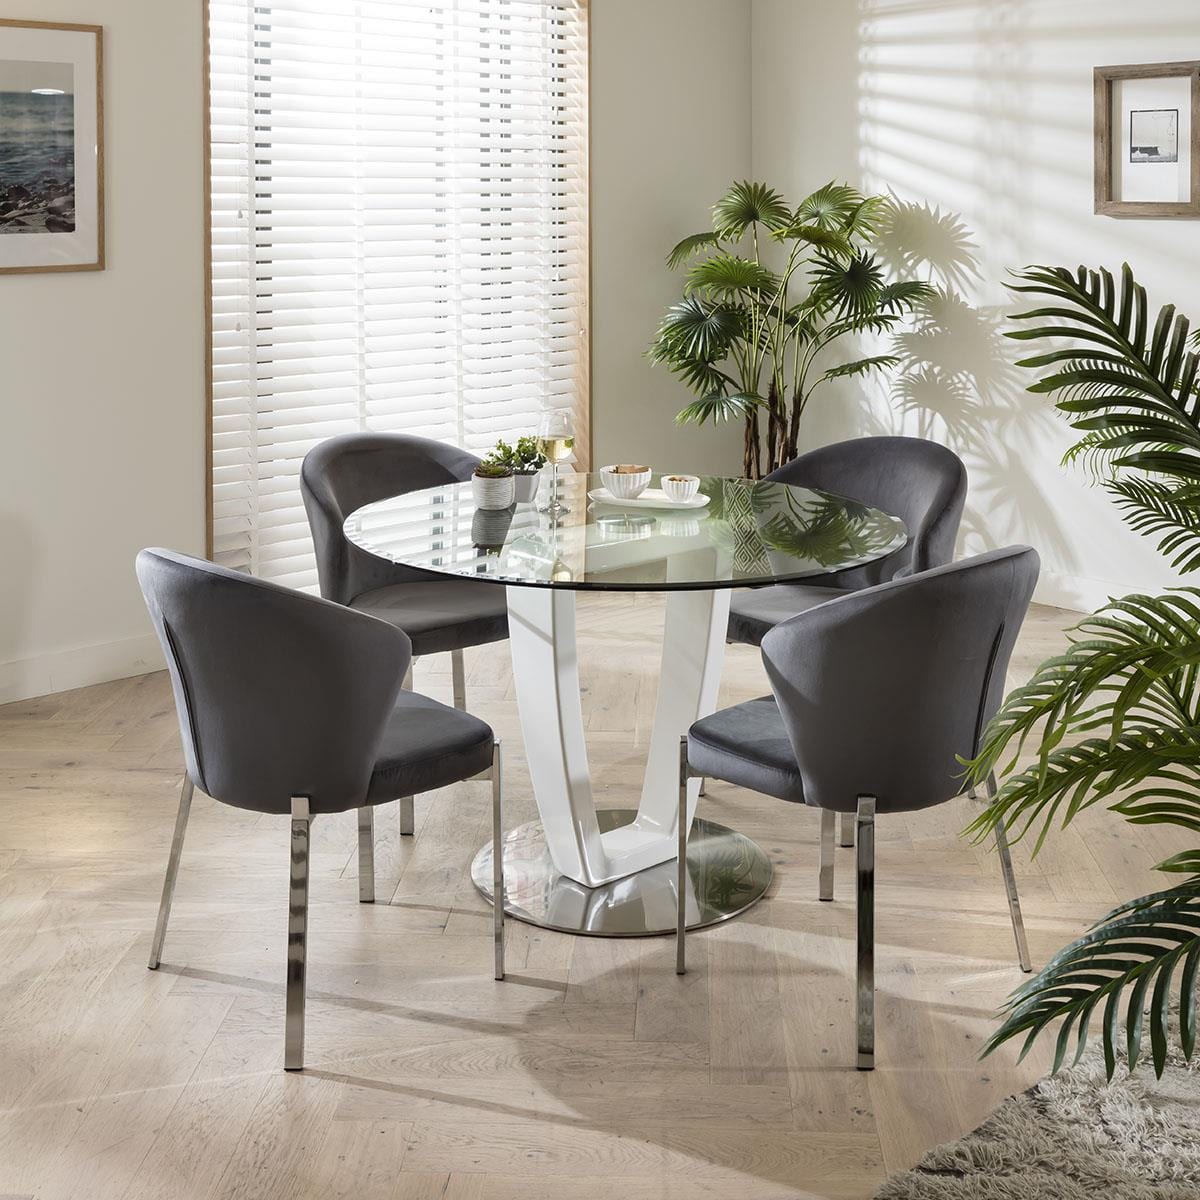 Quatropi 4 Seater Round Glass Dining Set With Pedistal Base & Grey Velvet Chairs